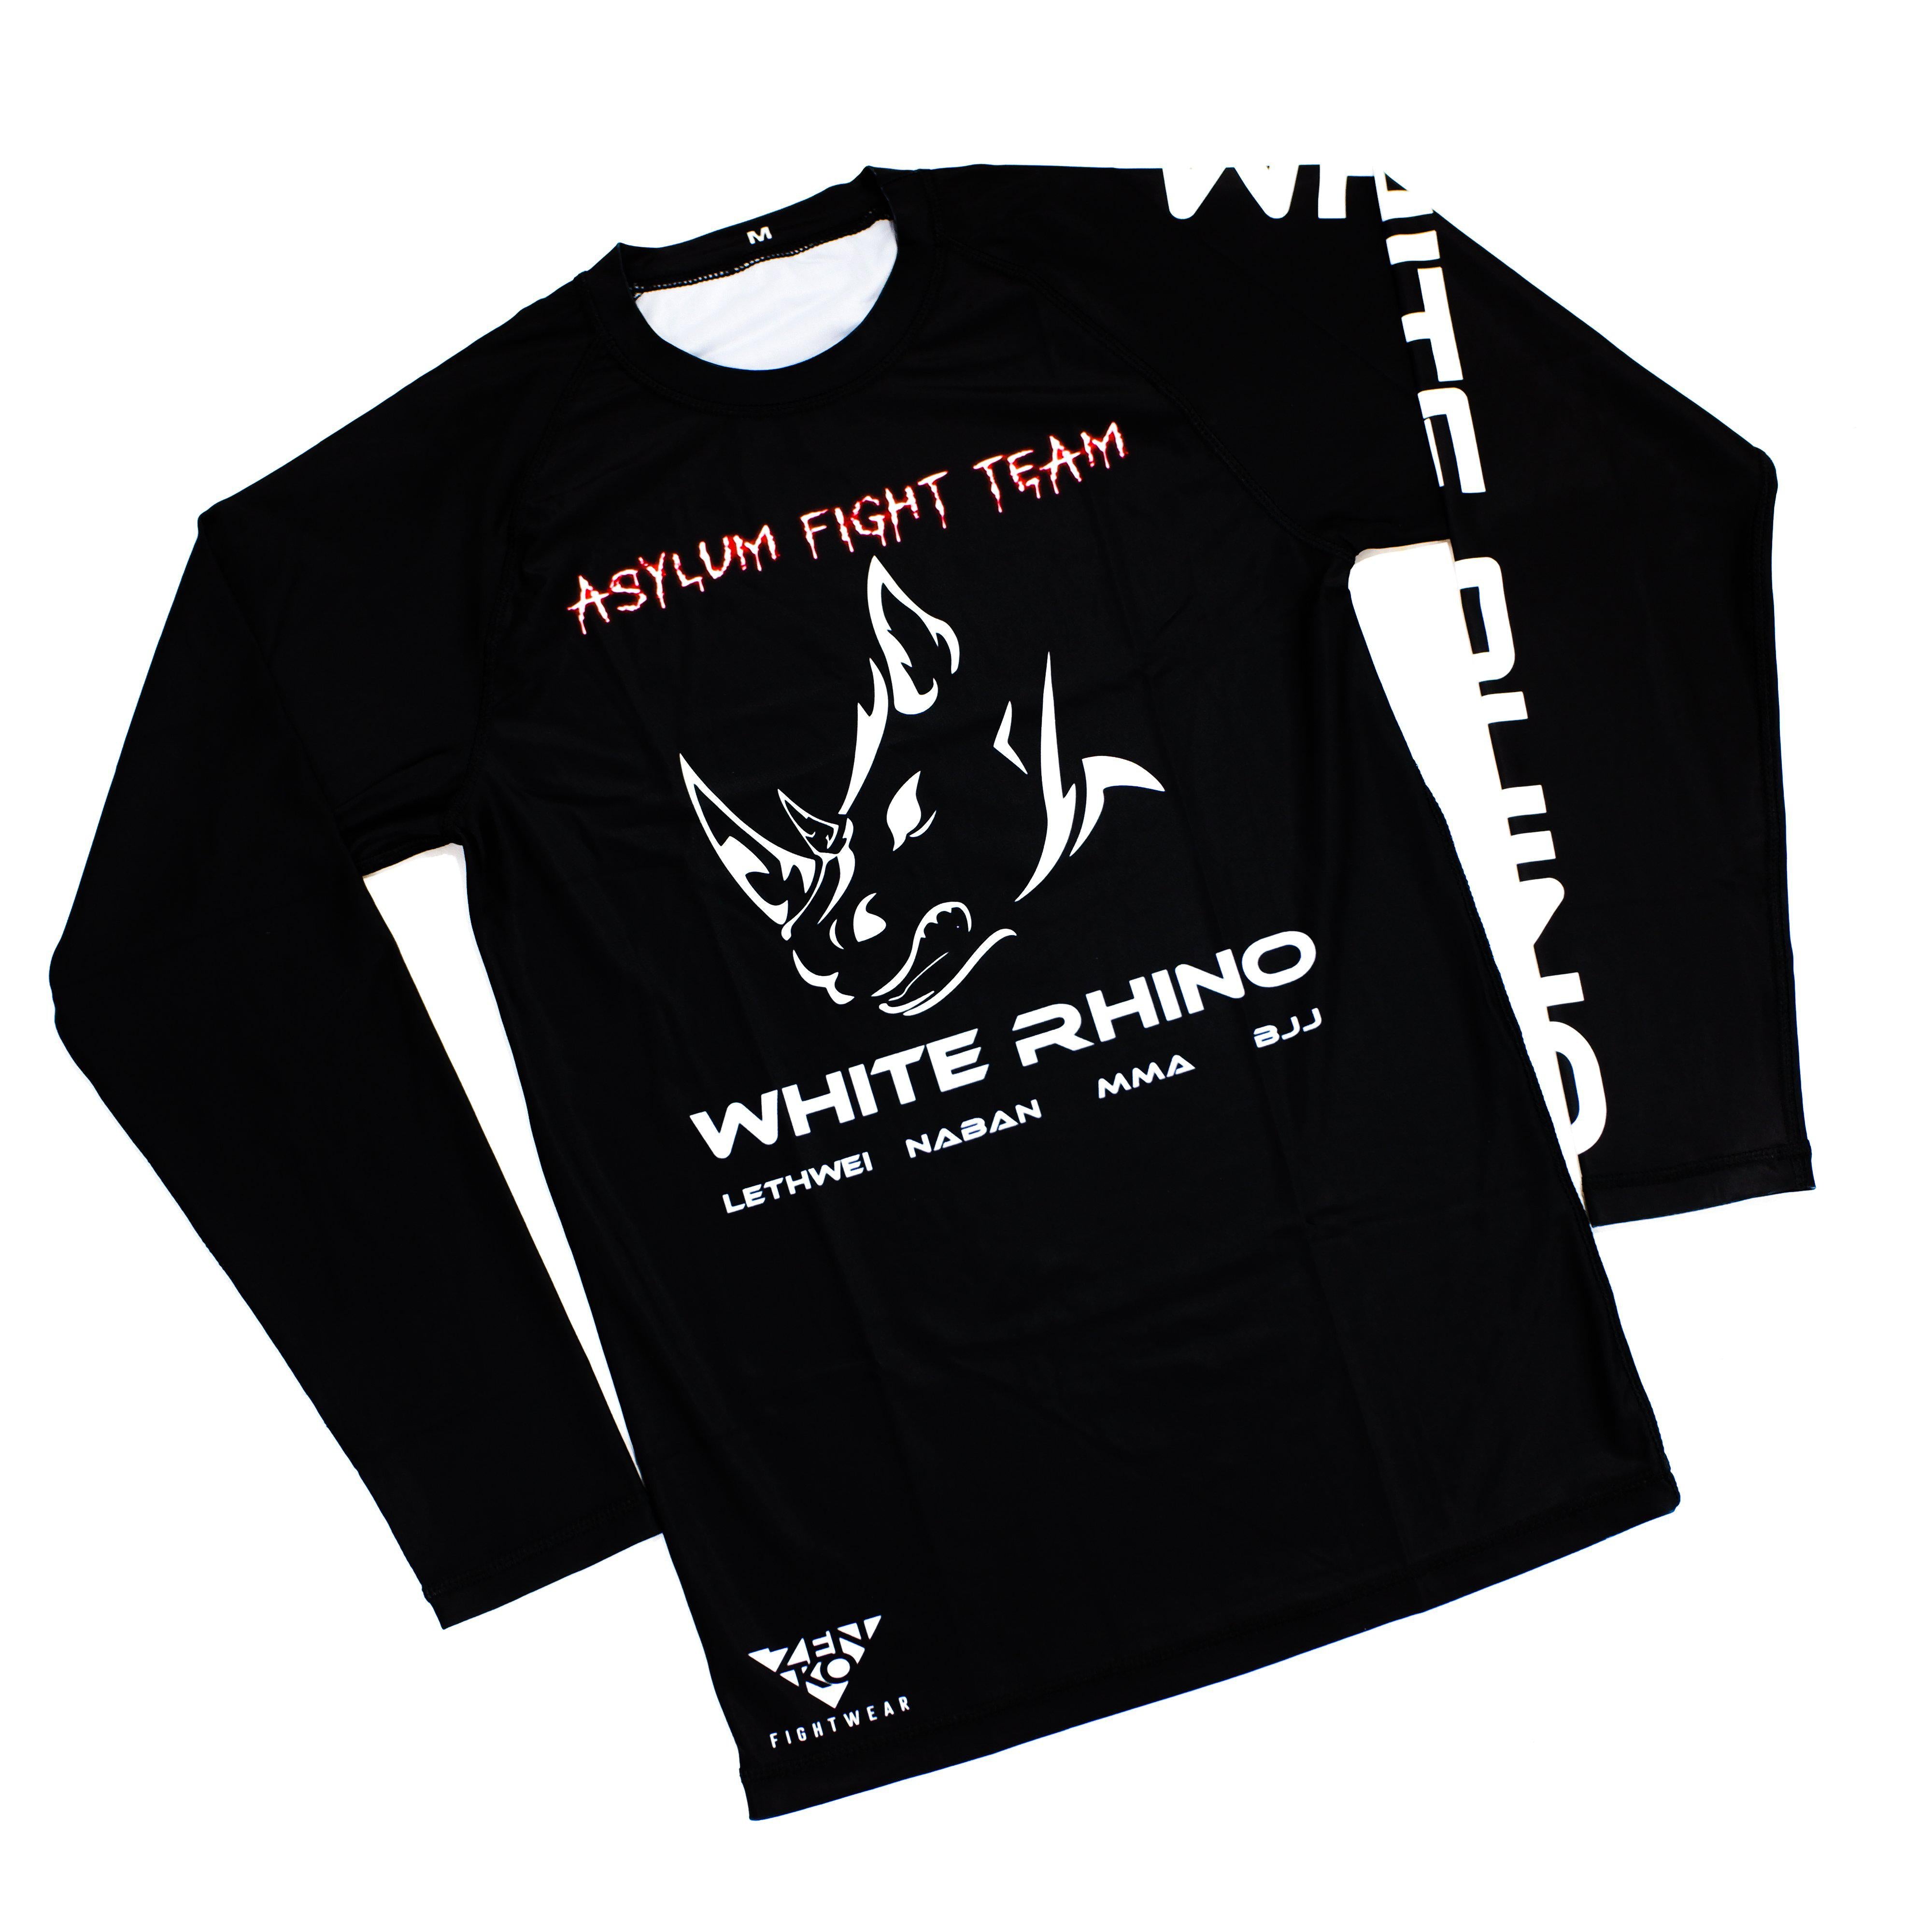 Asylum Fight Team - White Rhino Kickboxing Rhino Long Sleeve Rashguard - Zenko Fightwear